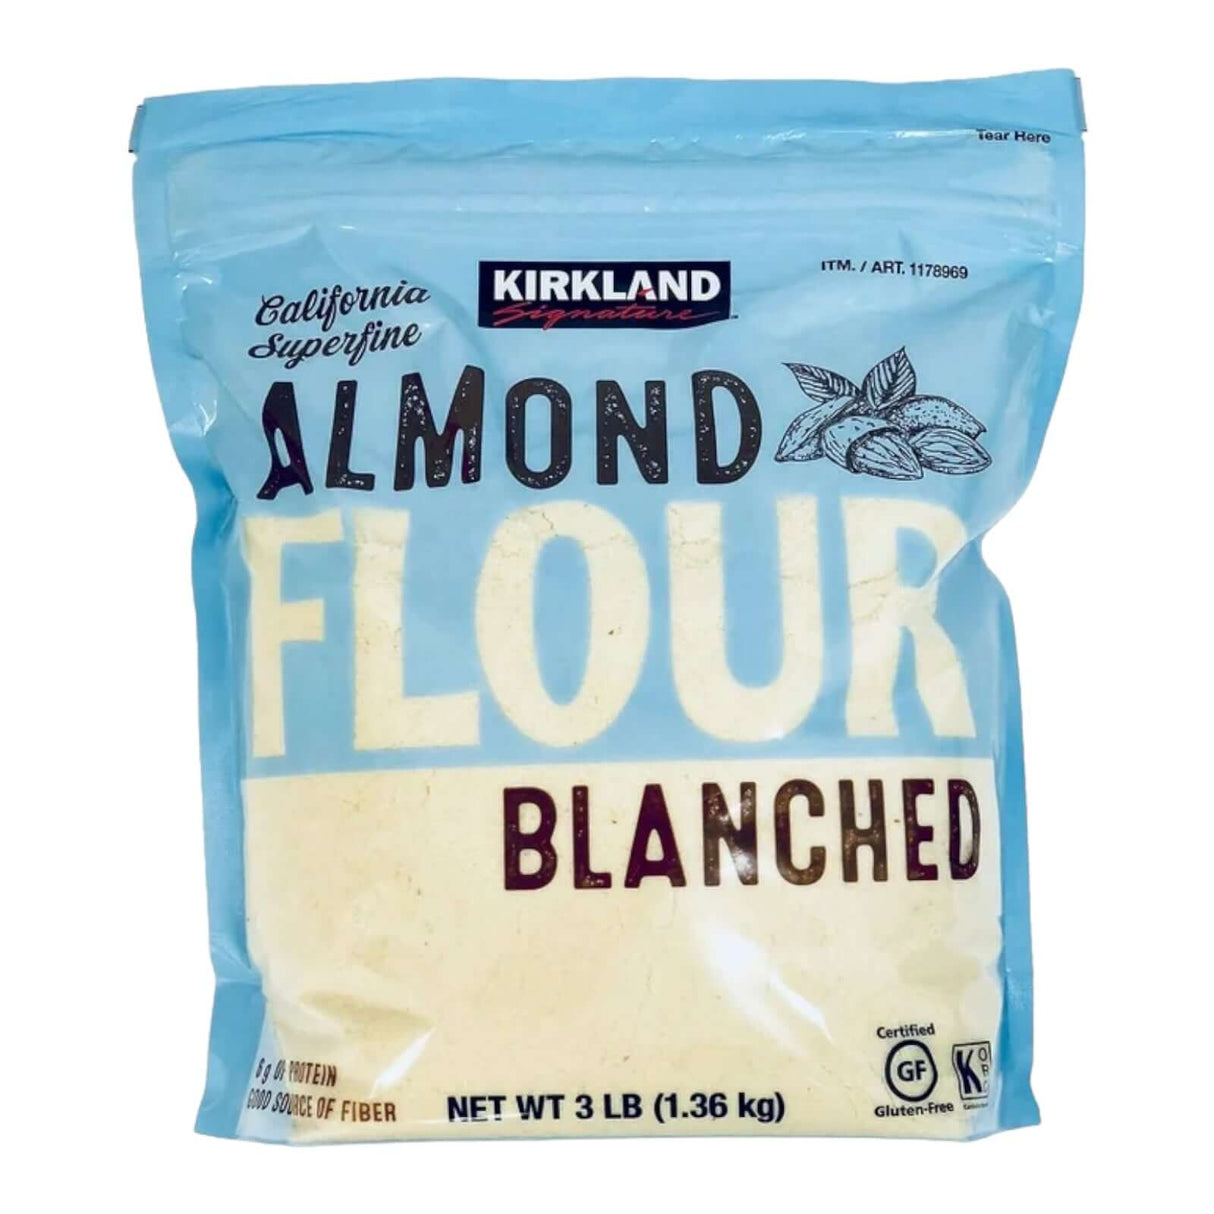 KIRKLAND Almond Flour